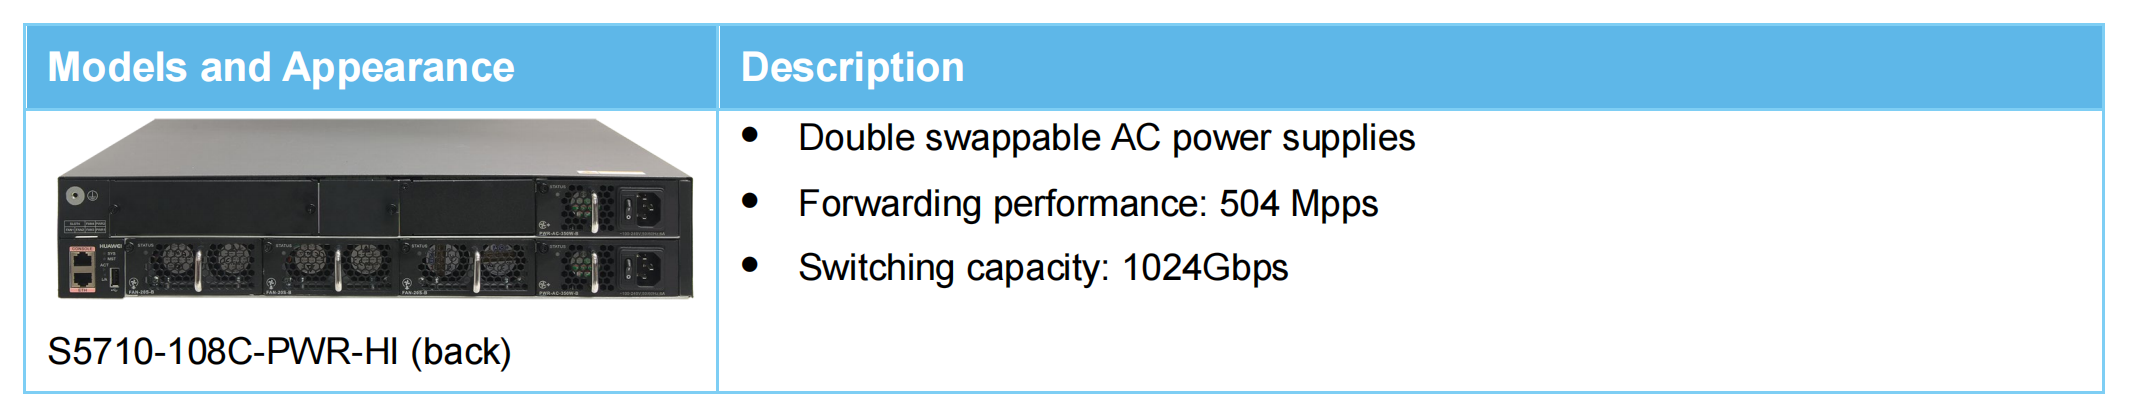 Huawei S5700-HI Series Switches (1)